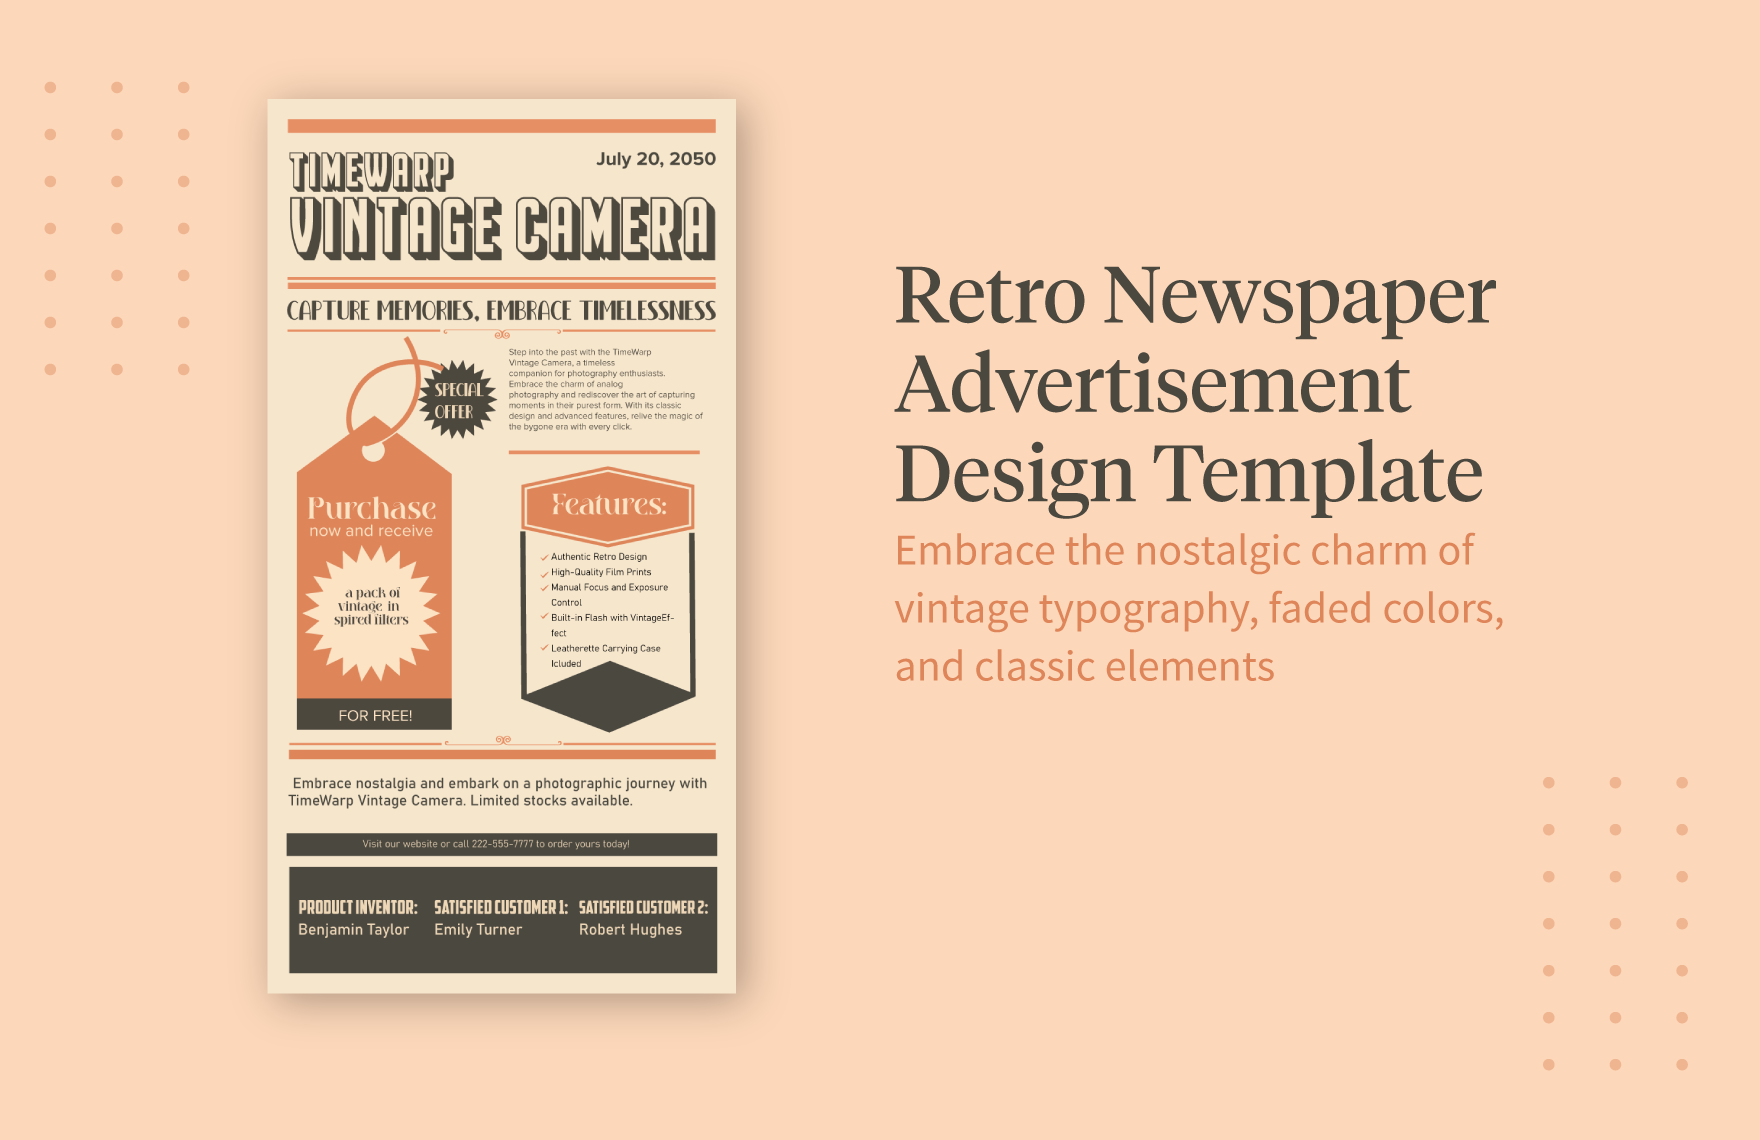 Retro Newspaper Advertisement Design Template